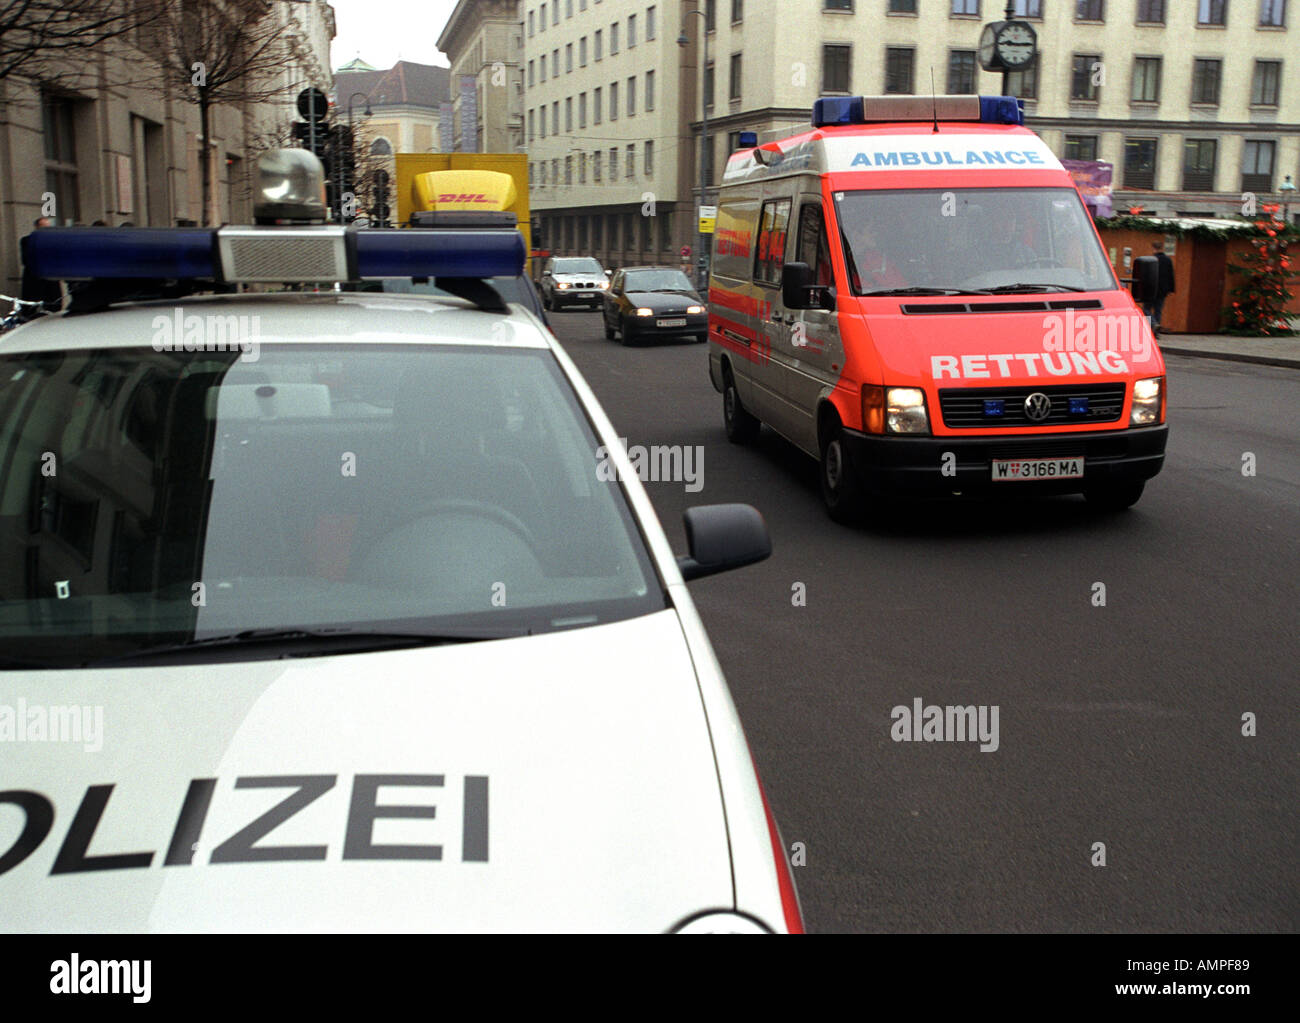 Polizei-Auto in Bratislava Slowakei Stockfoto